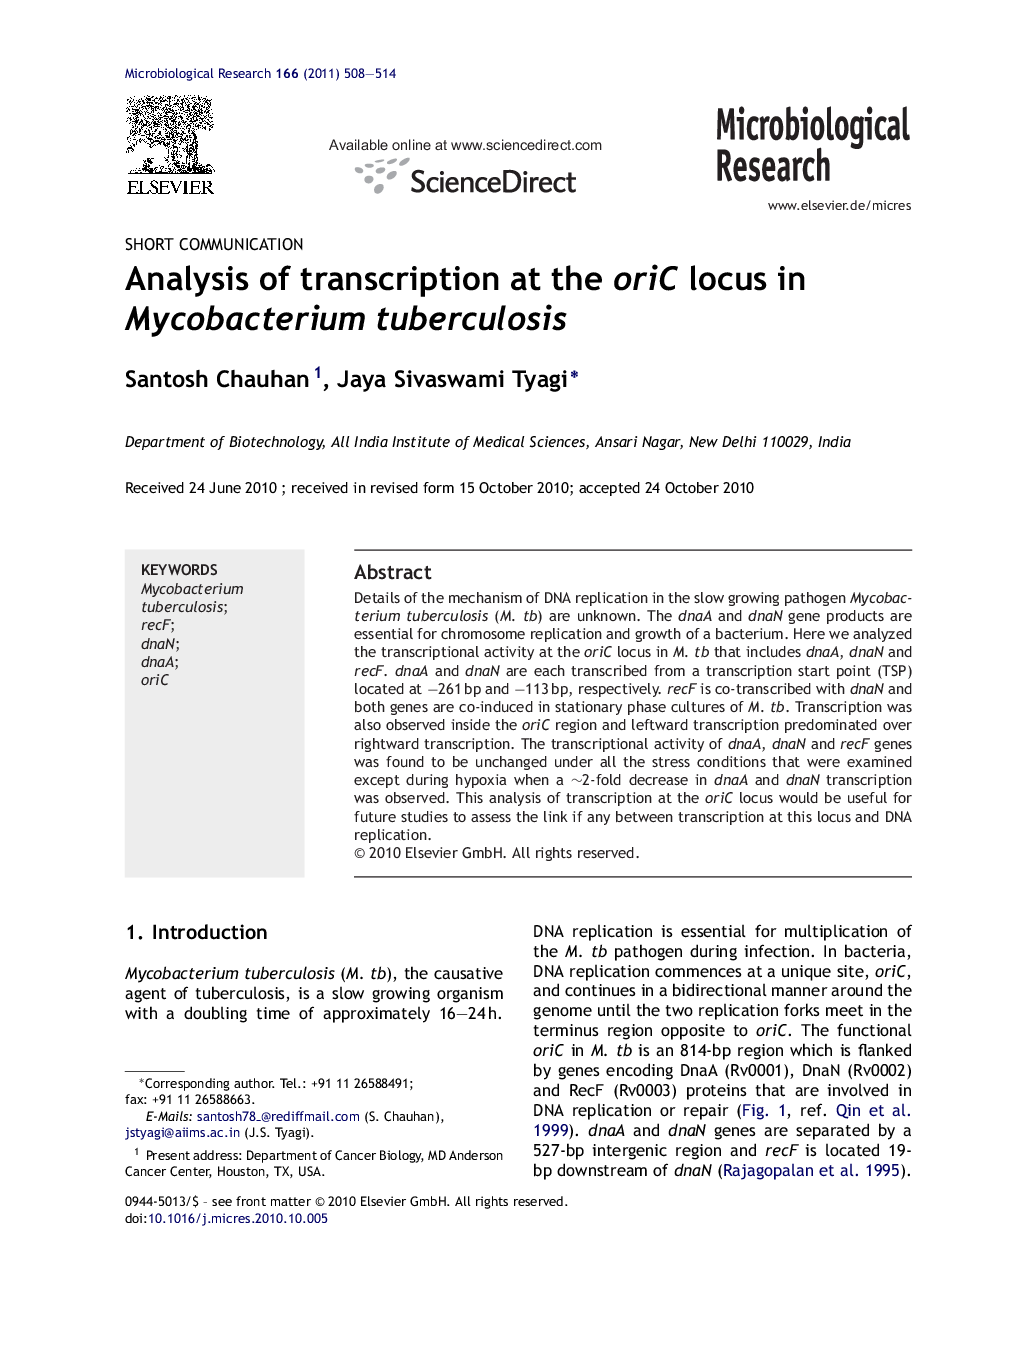 Analysis of transcription at the oriC locus in Mycobacterium tuberculosis